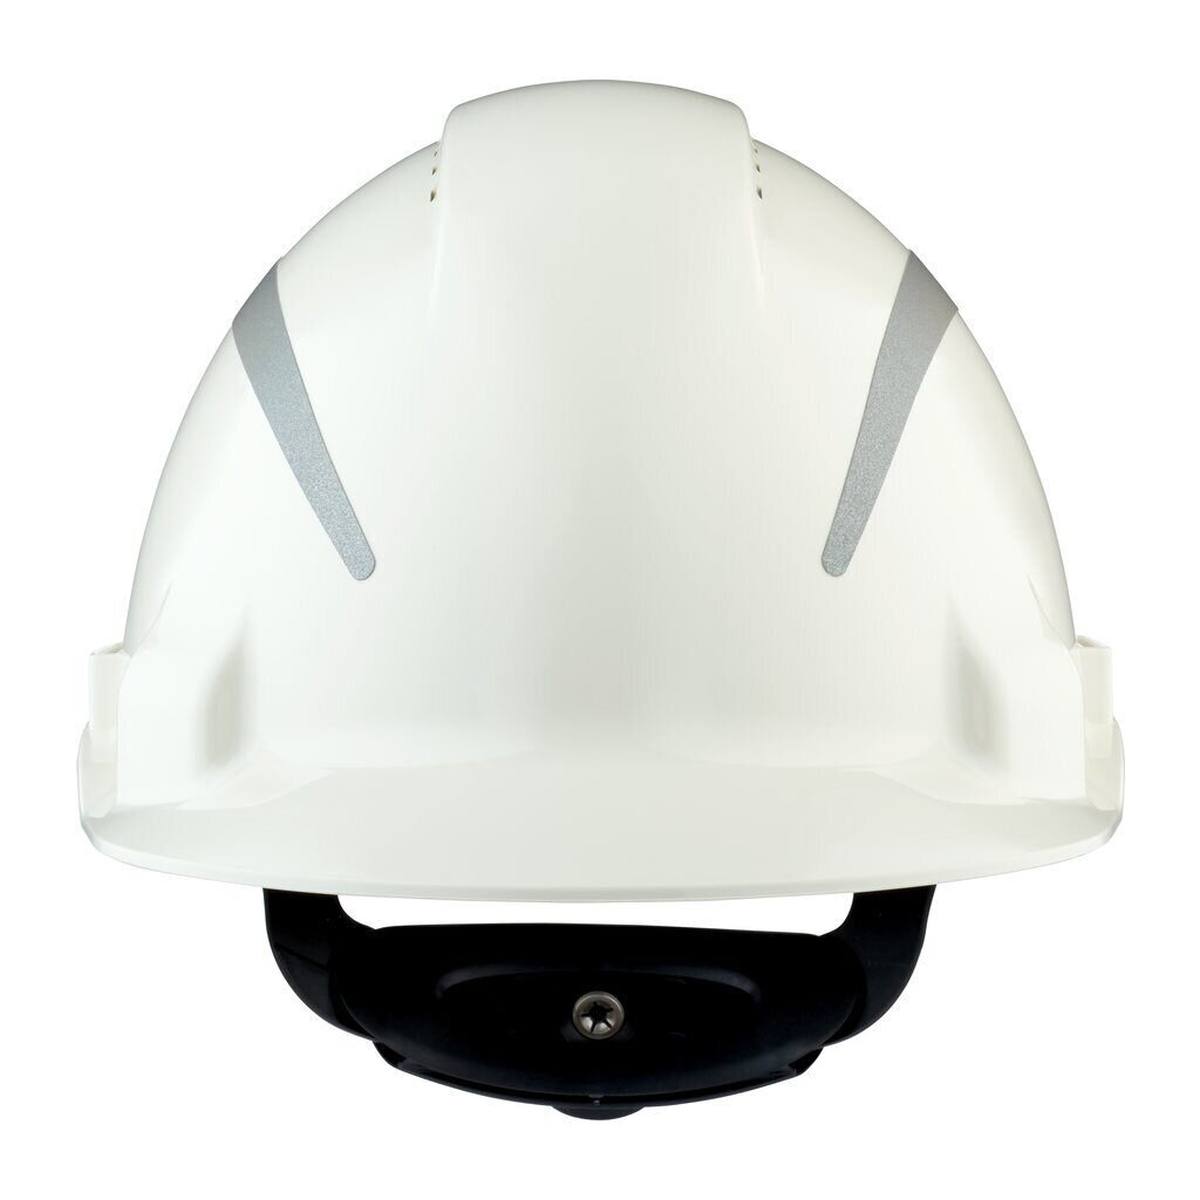 3M G3000 veiligheidshelm met UV-indicator, wit, ABS, geventileerde ratelsluiting, kunststof zweetband, reflecterende stickers